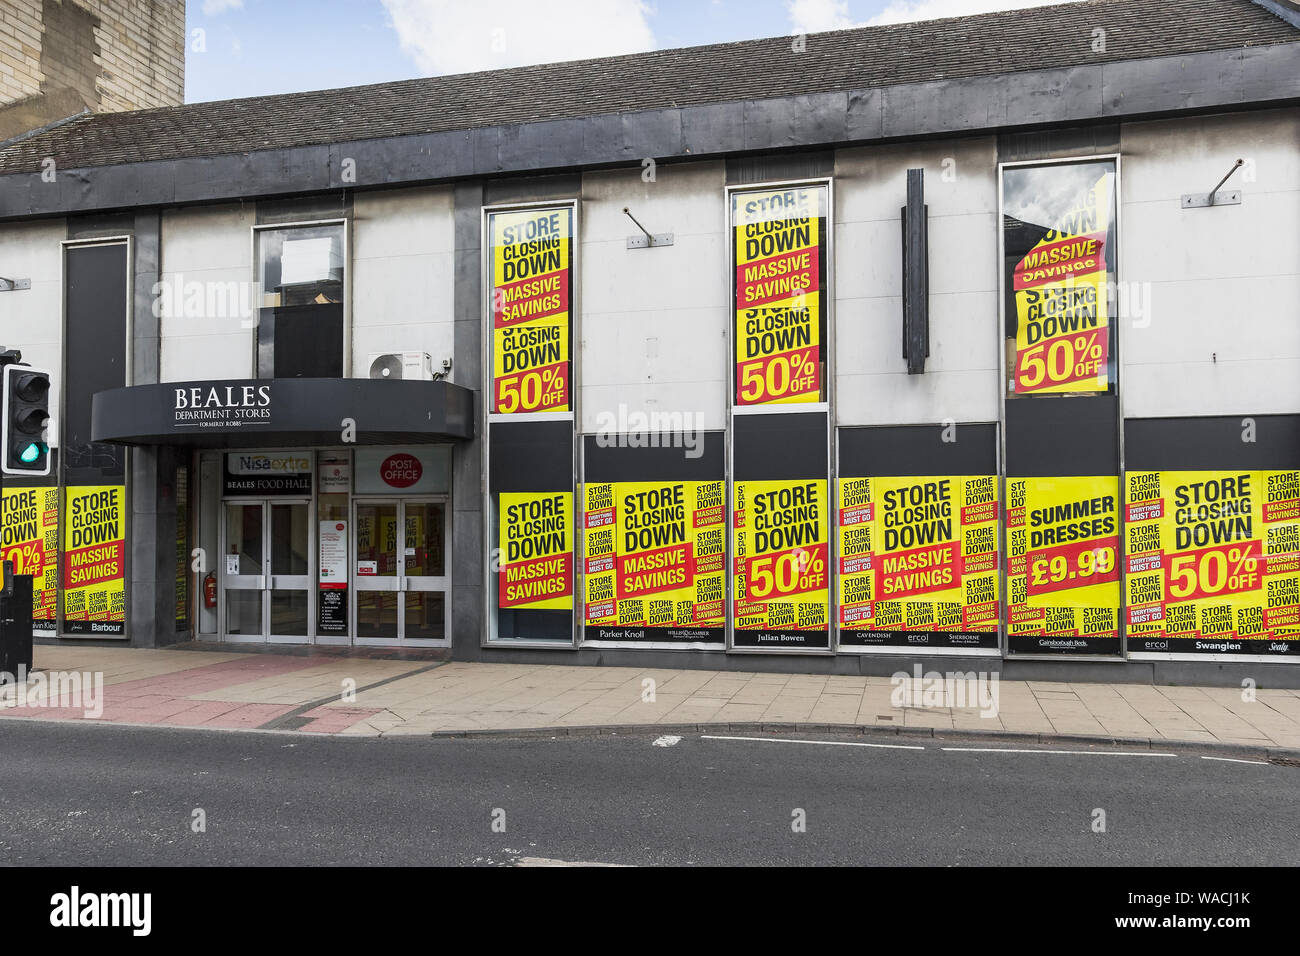 Beales department store at Hexham, Northumberland closing down. Stock Photo